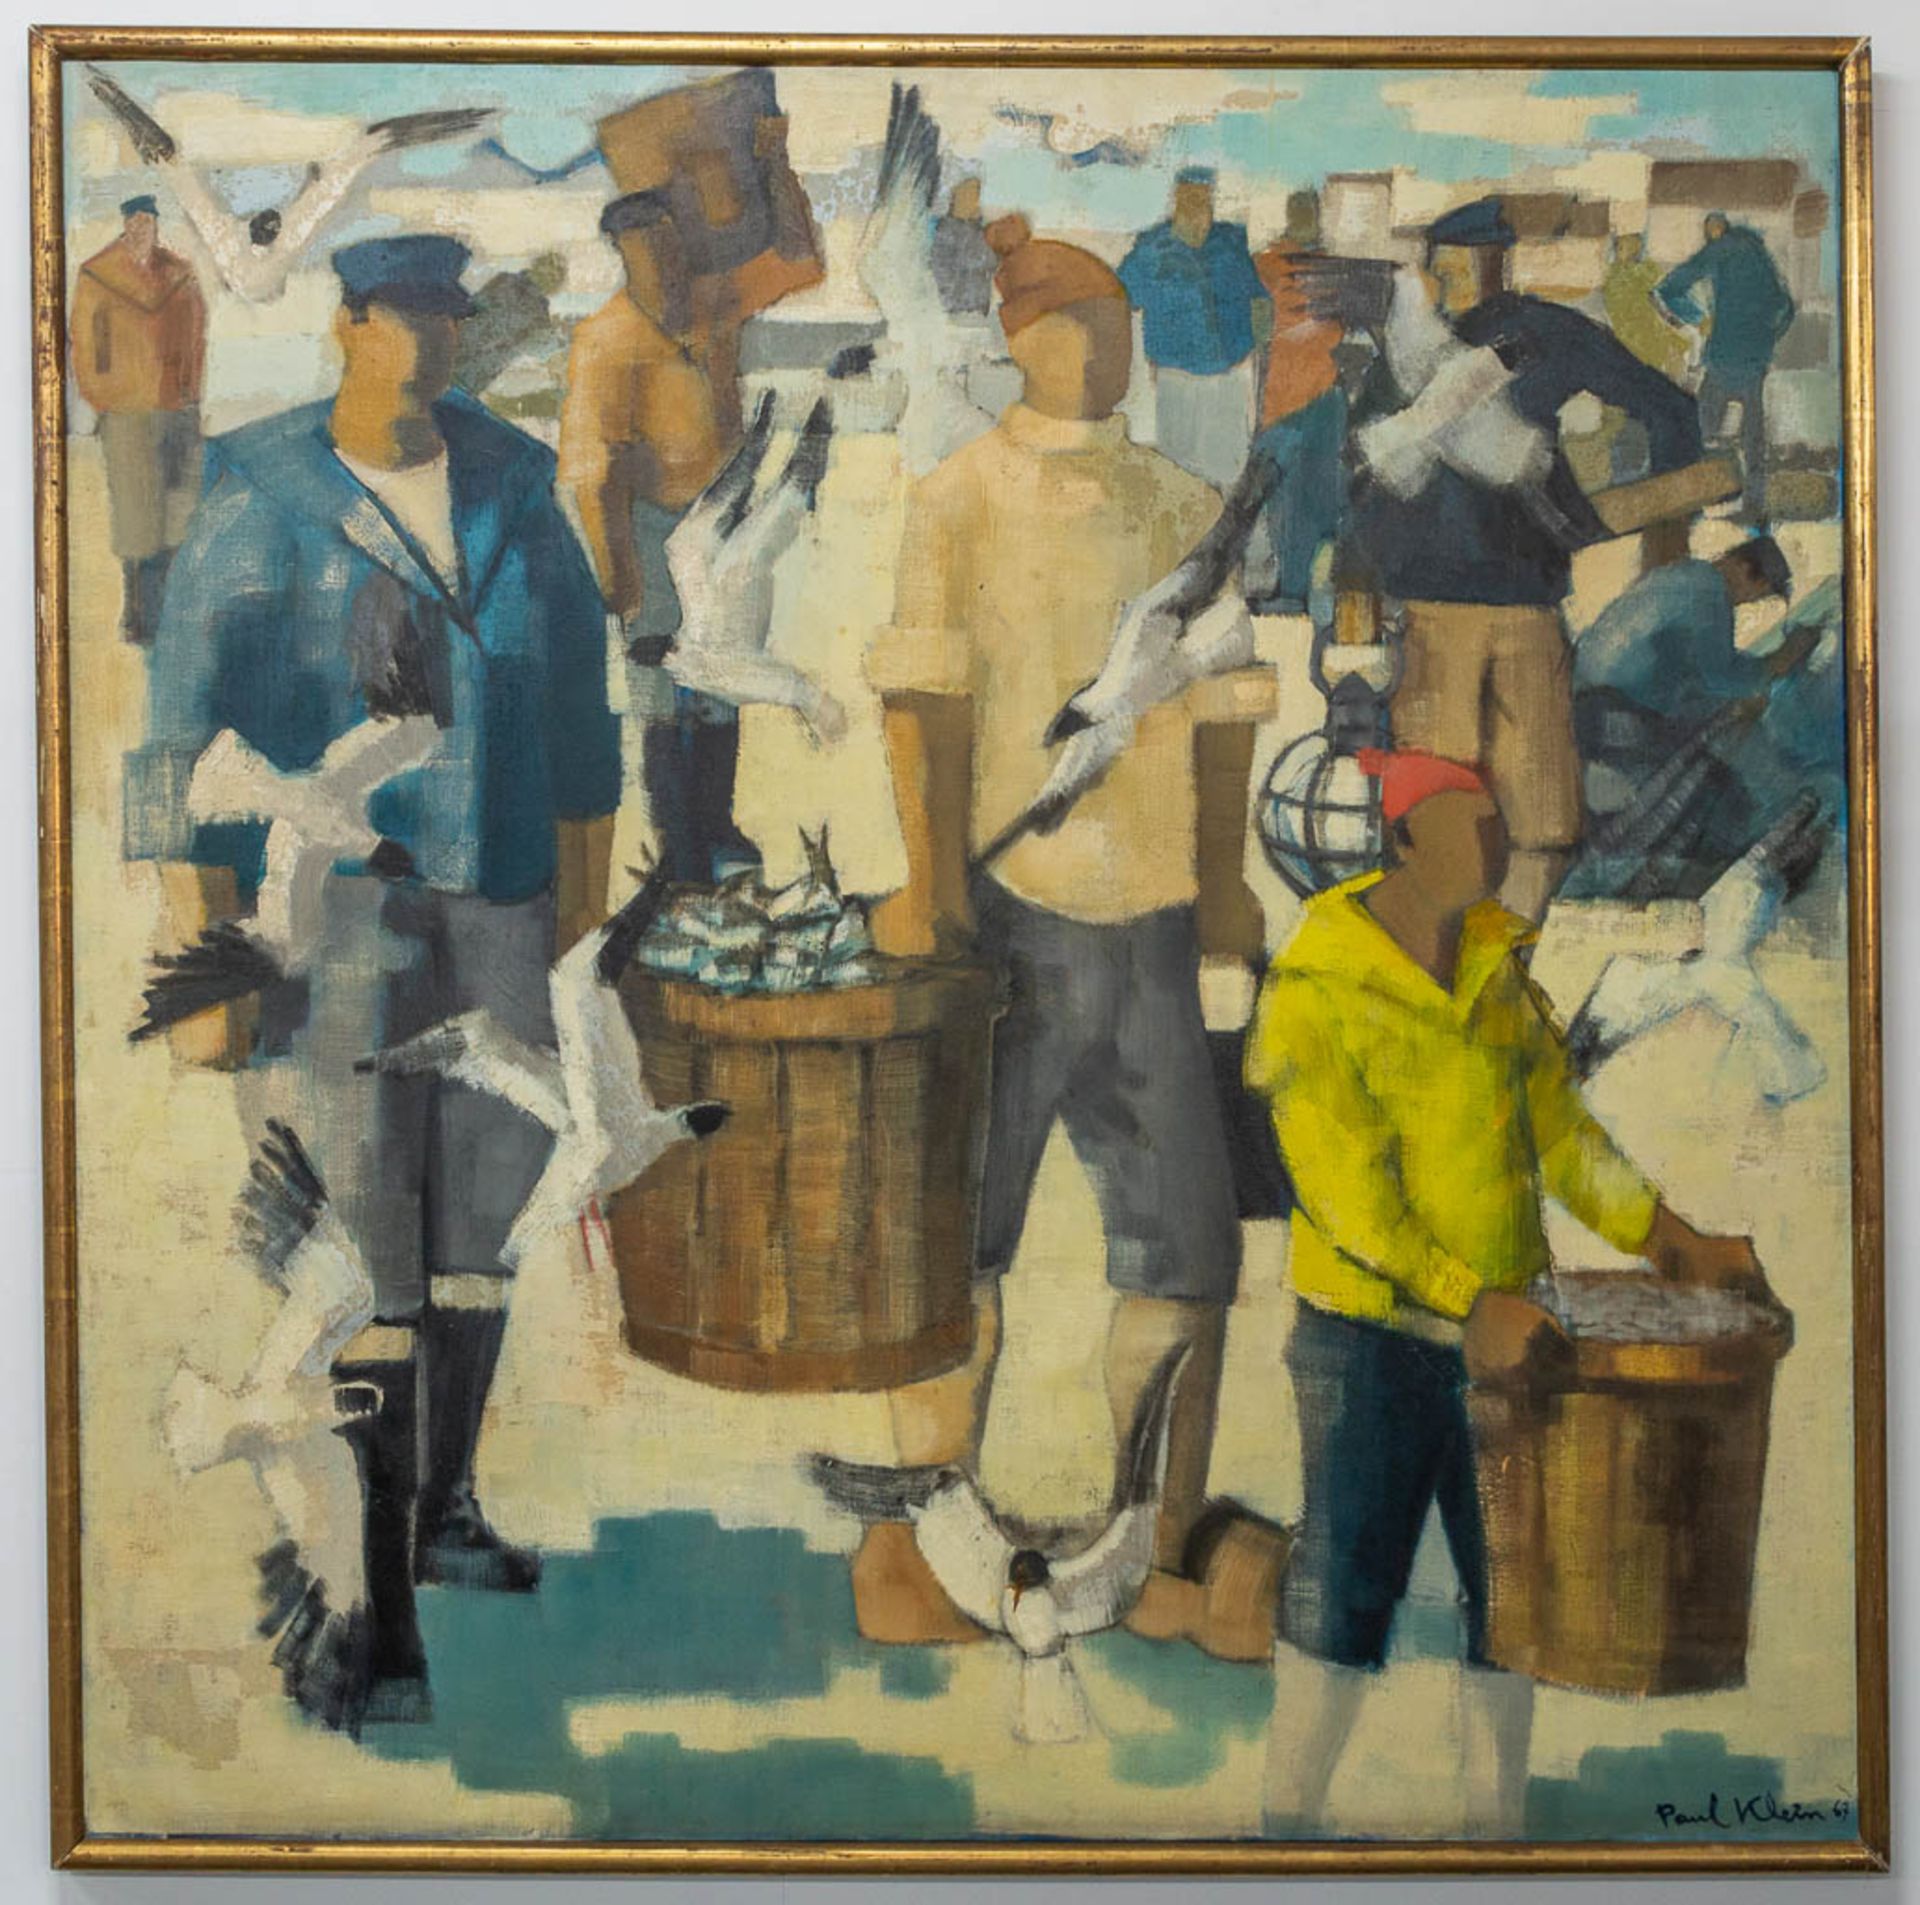 Paul KLEIN (1909-1994) The fishermen on the beach, oil on canvas, 1967